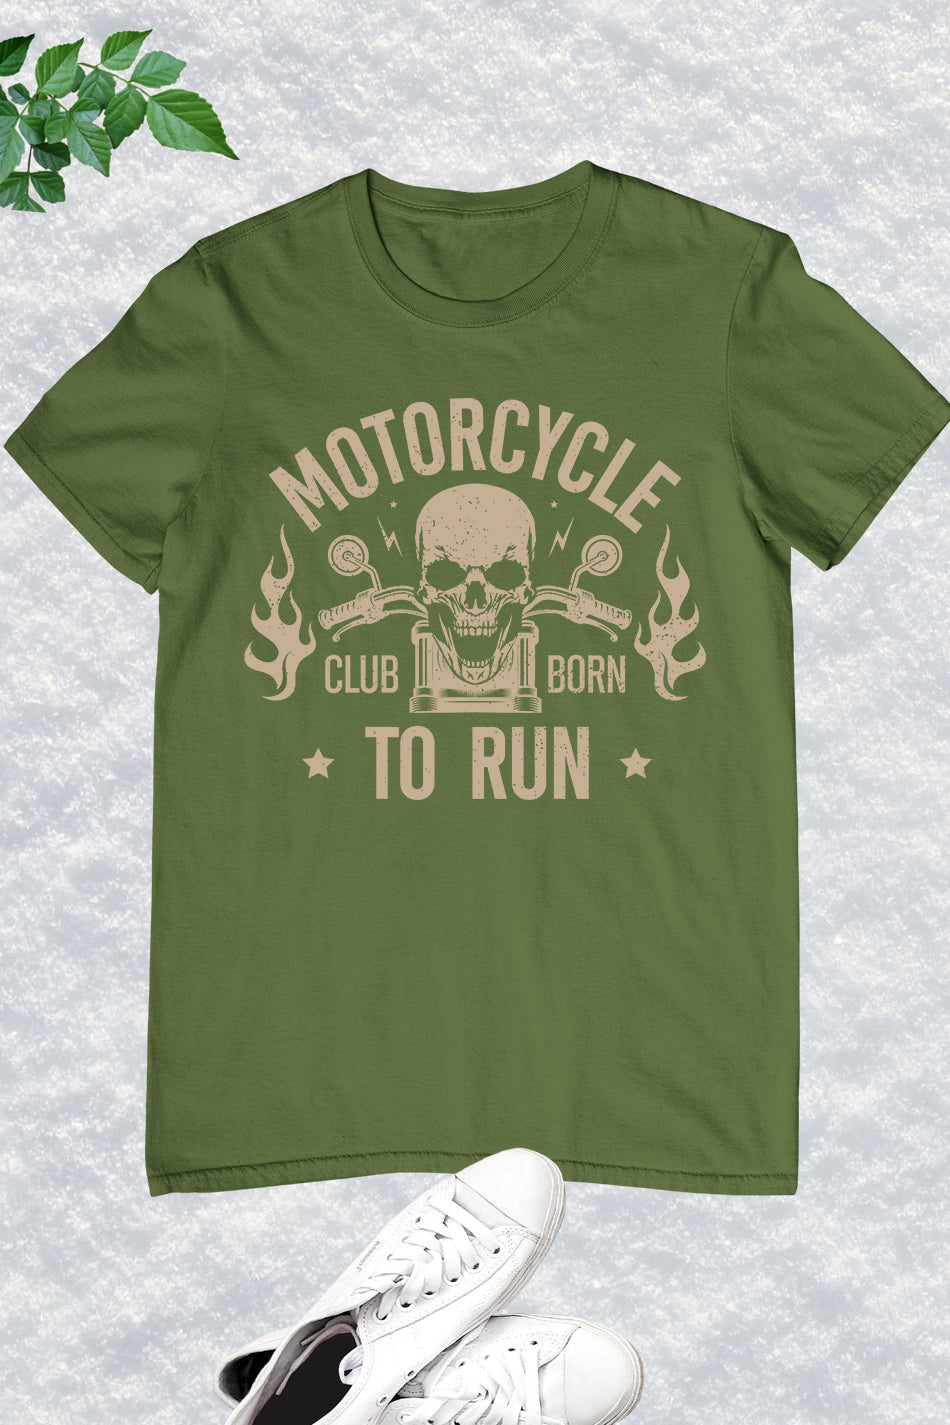 Motorcycle Club Born To Ride Shirt